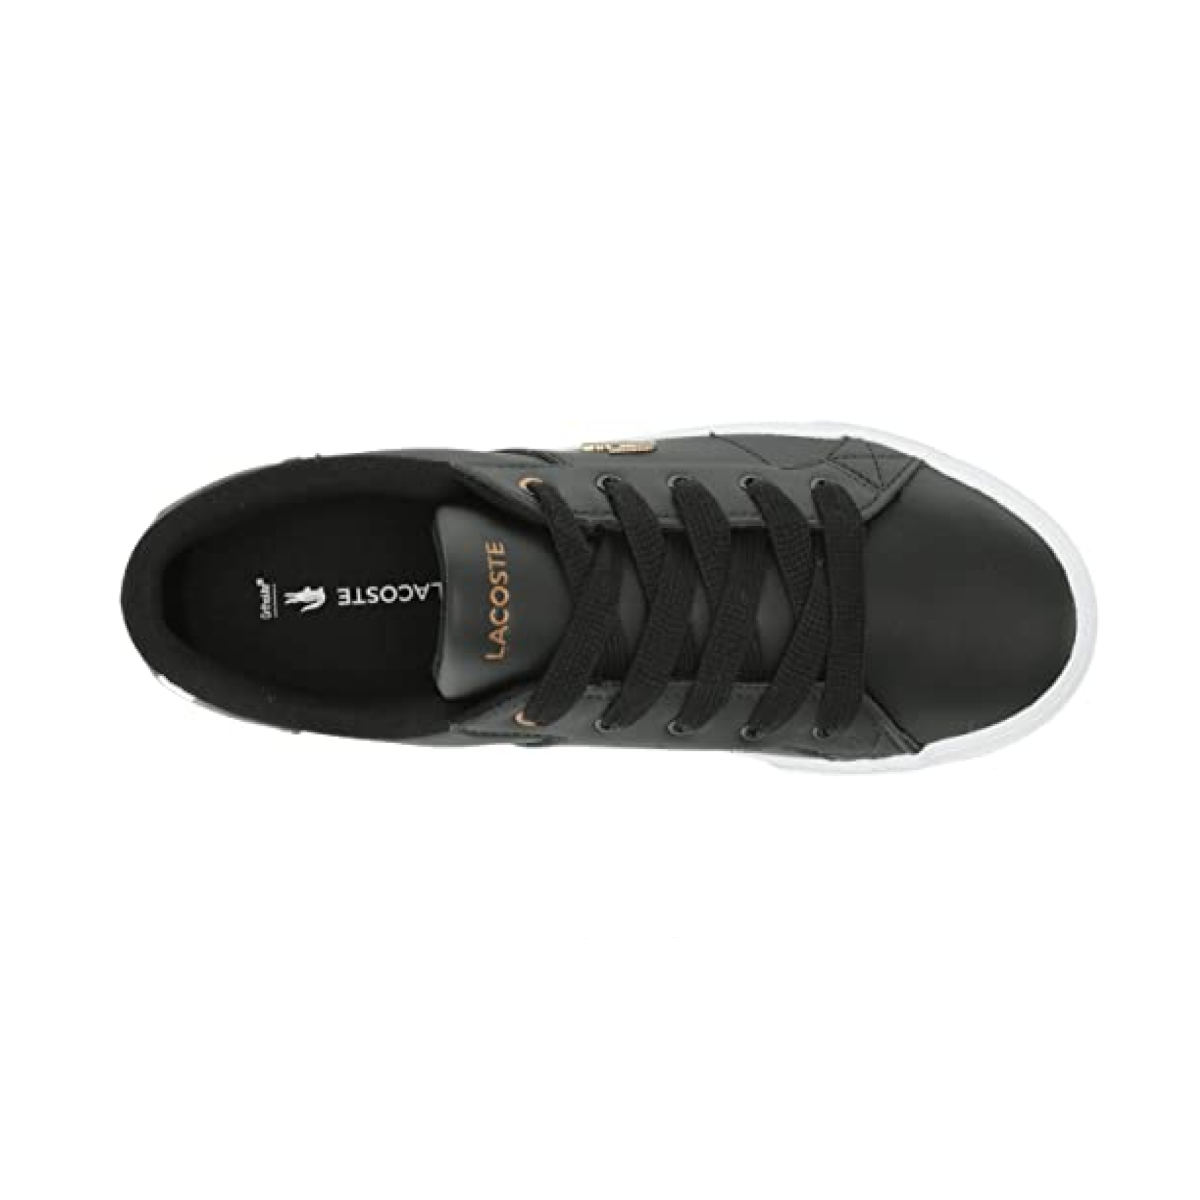 LACOSTE 7-45CFA0013312 ZIANE PLATFORM WMN'S (Medium) Black/White Leather & Synthetic Lifestyle Shoes